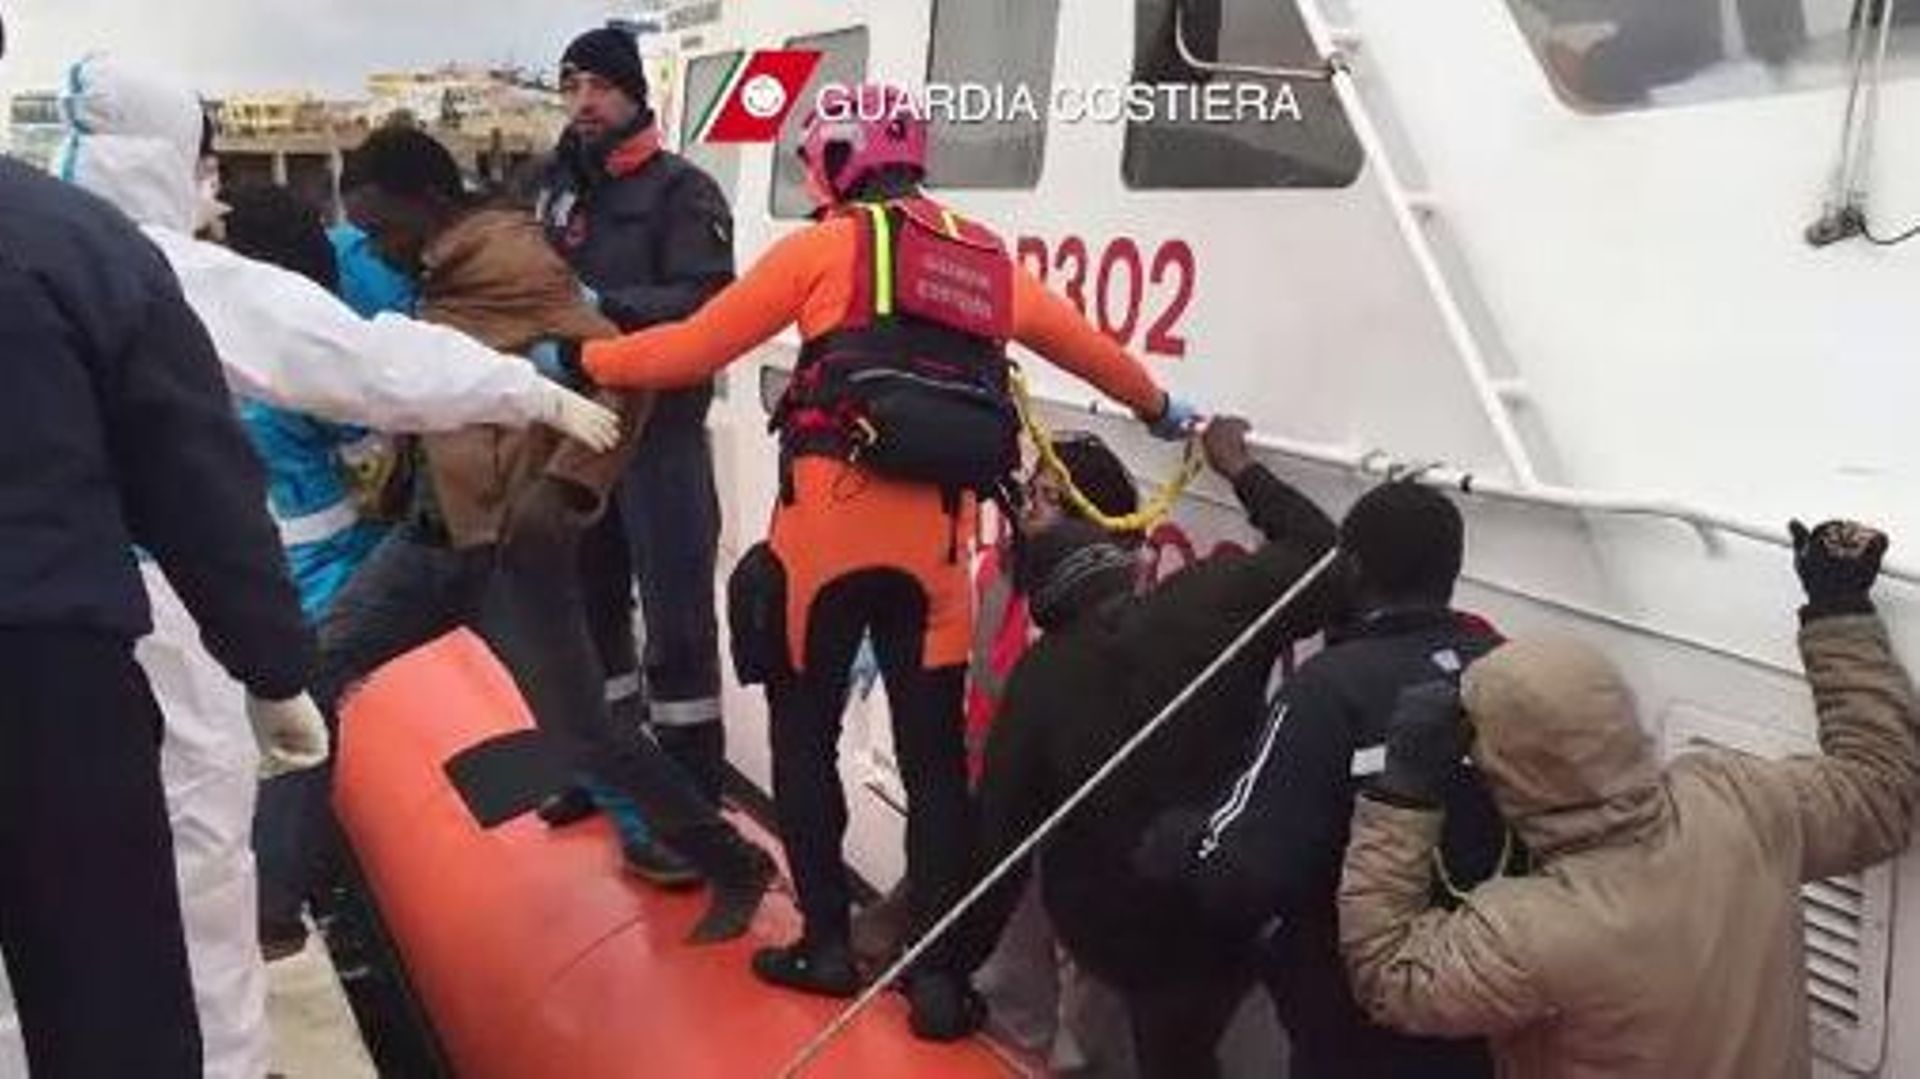 mediterranee-plus-de-300-migrants-portes-disparus-en-mer